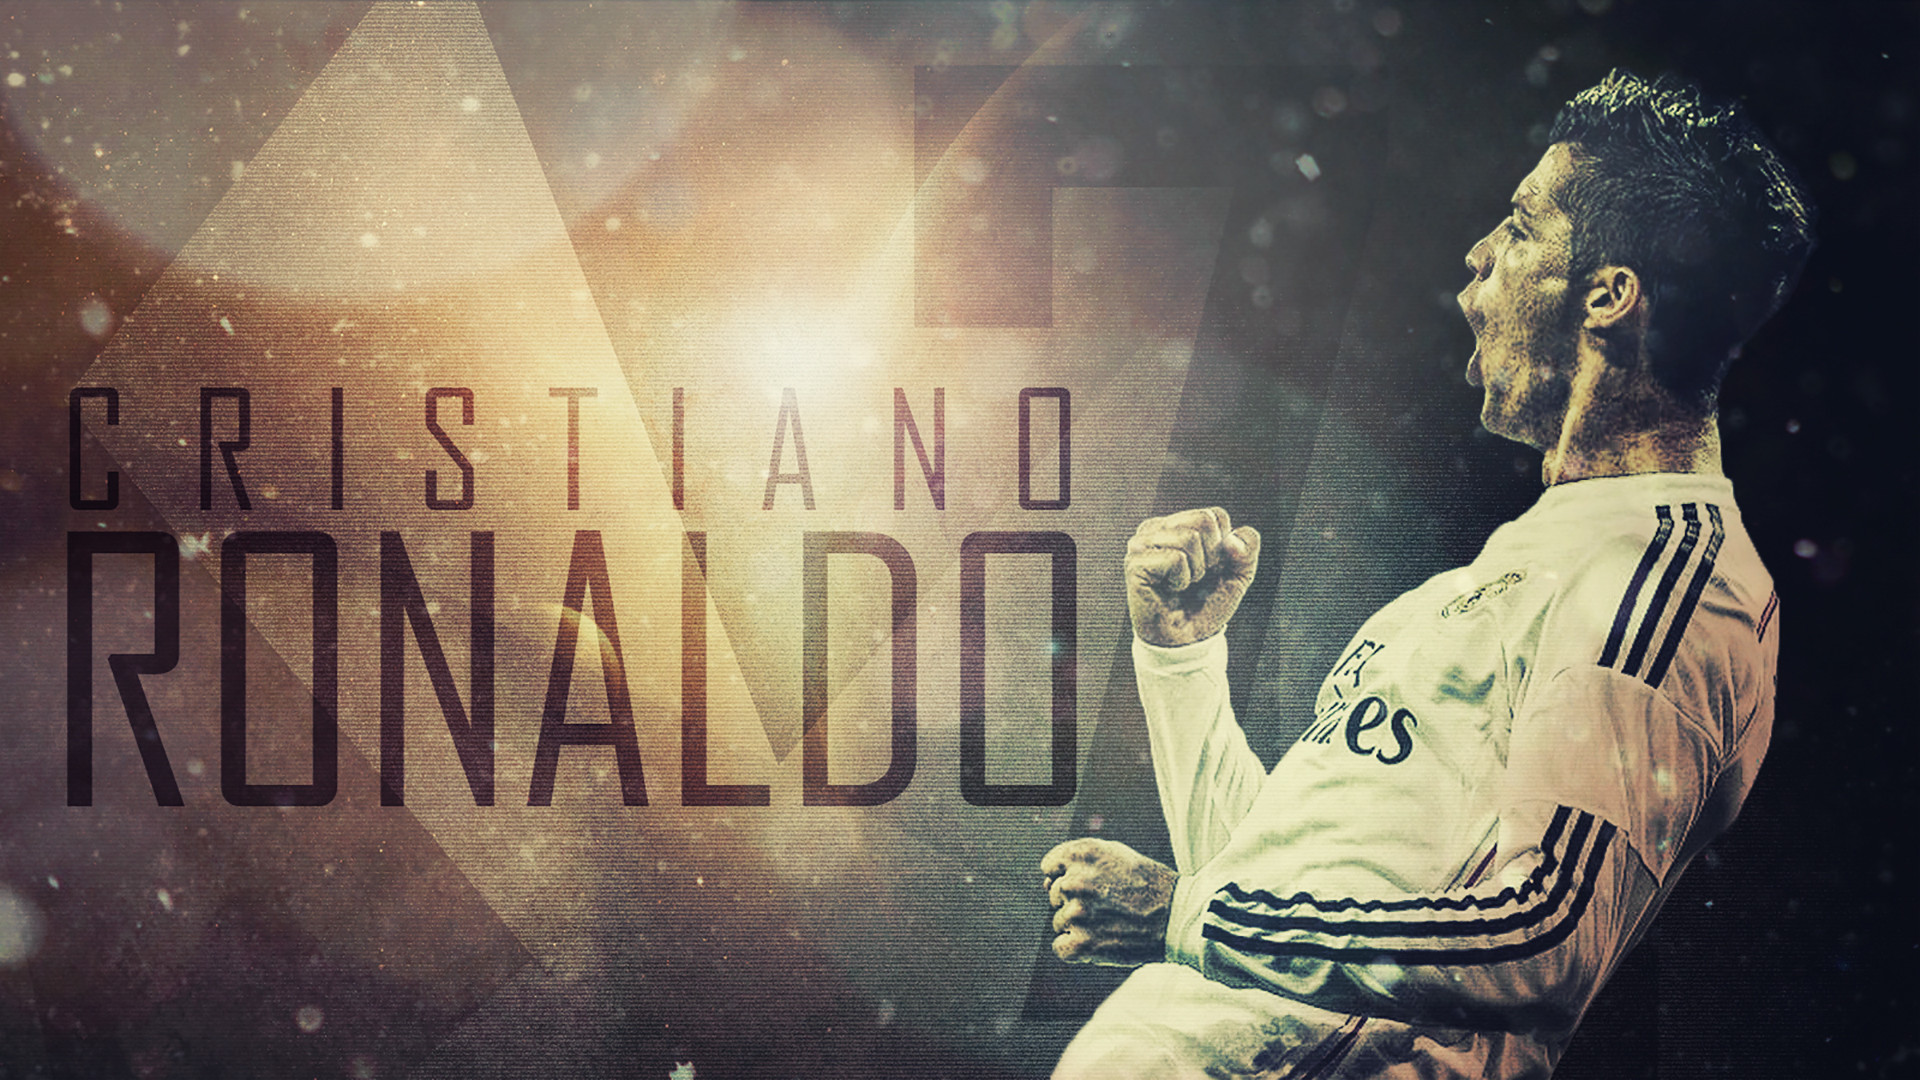 Cristiano-Ronaldo-CR7-HD-Wallpapers-Free-Download-Wallpaperxyz.